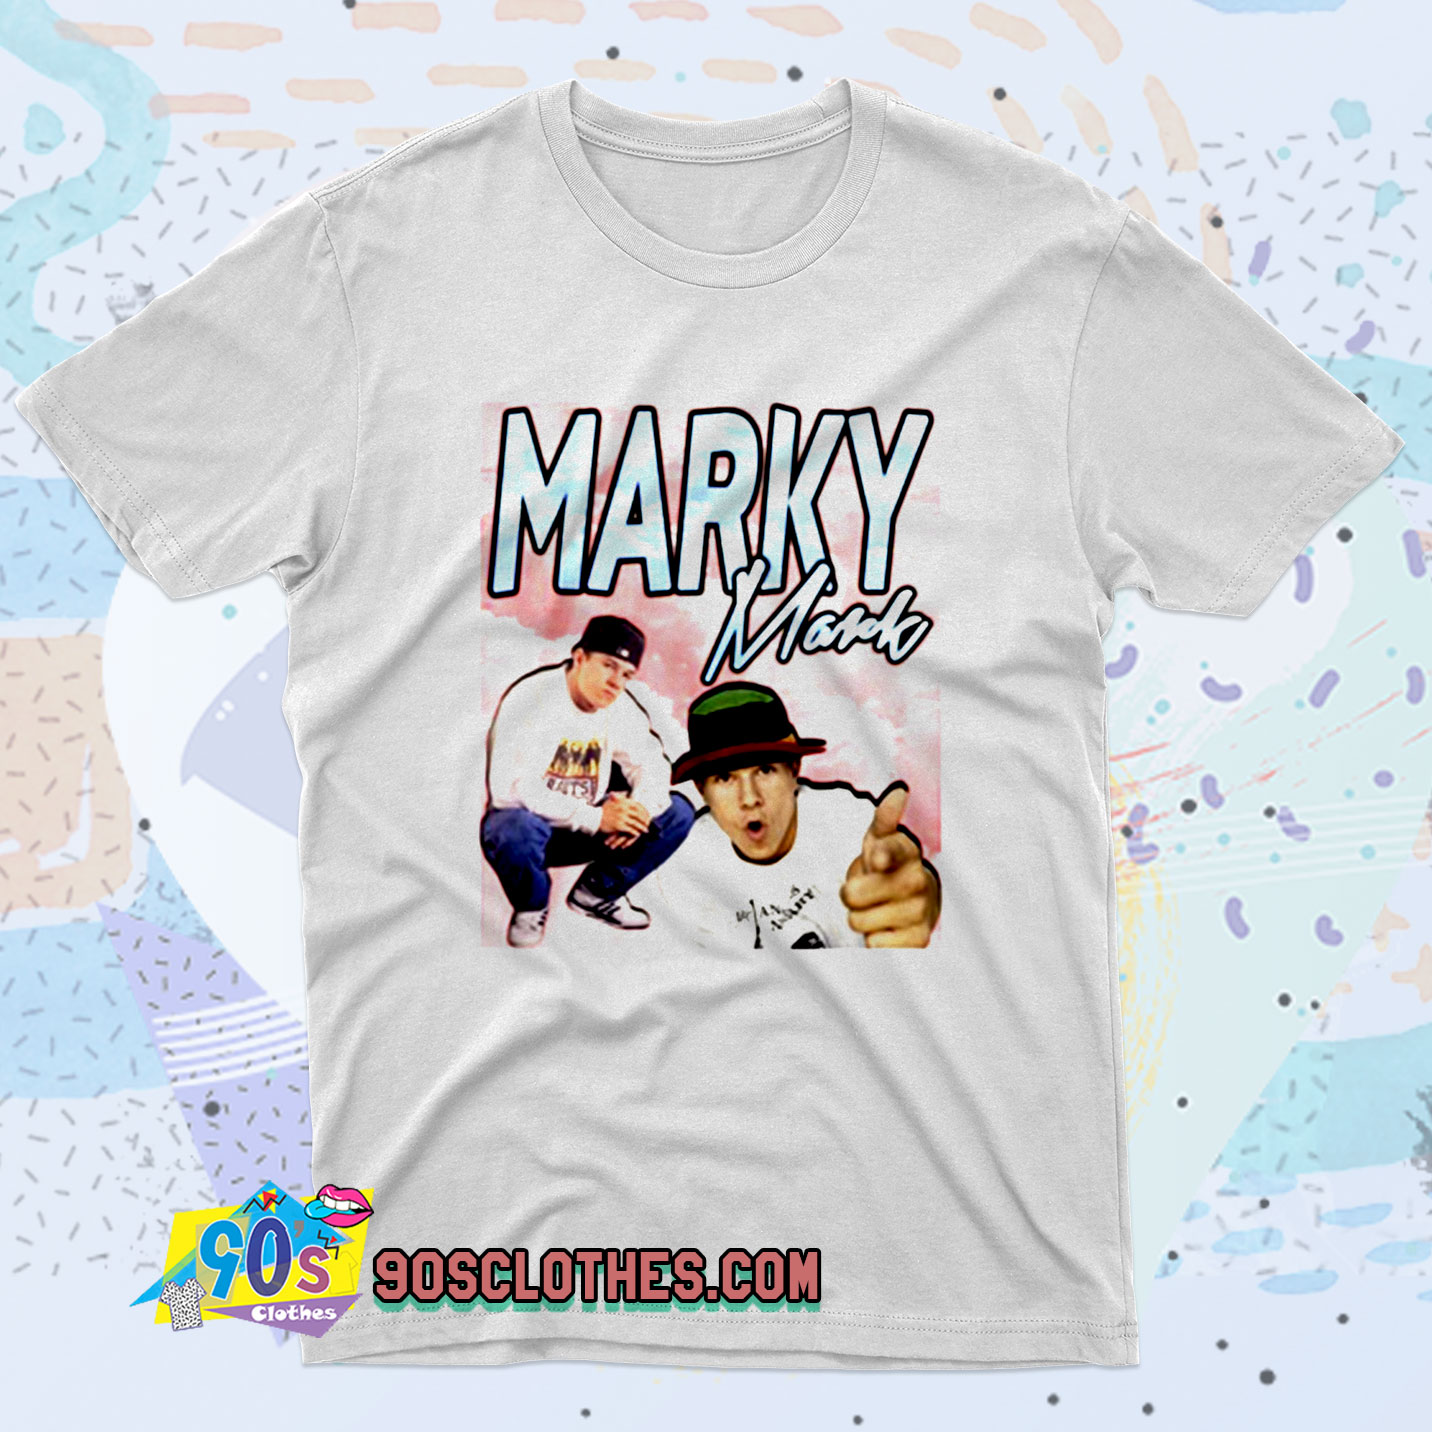 Mark Rapper Fashionable T shirt - 90sclothes.com